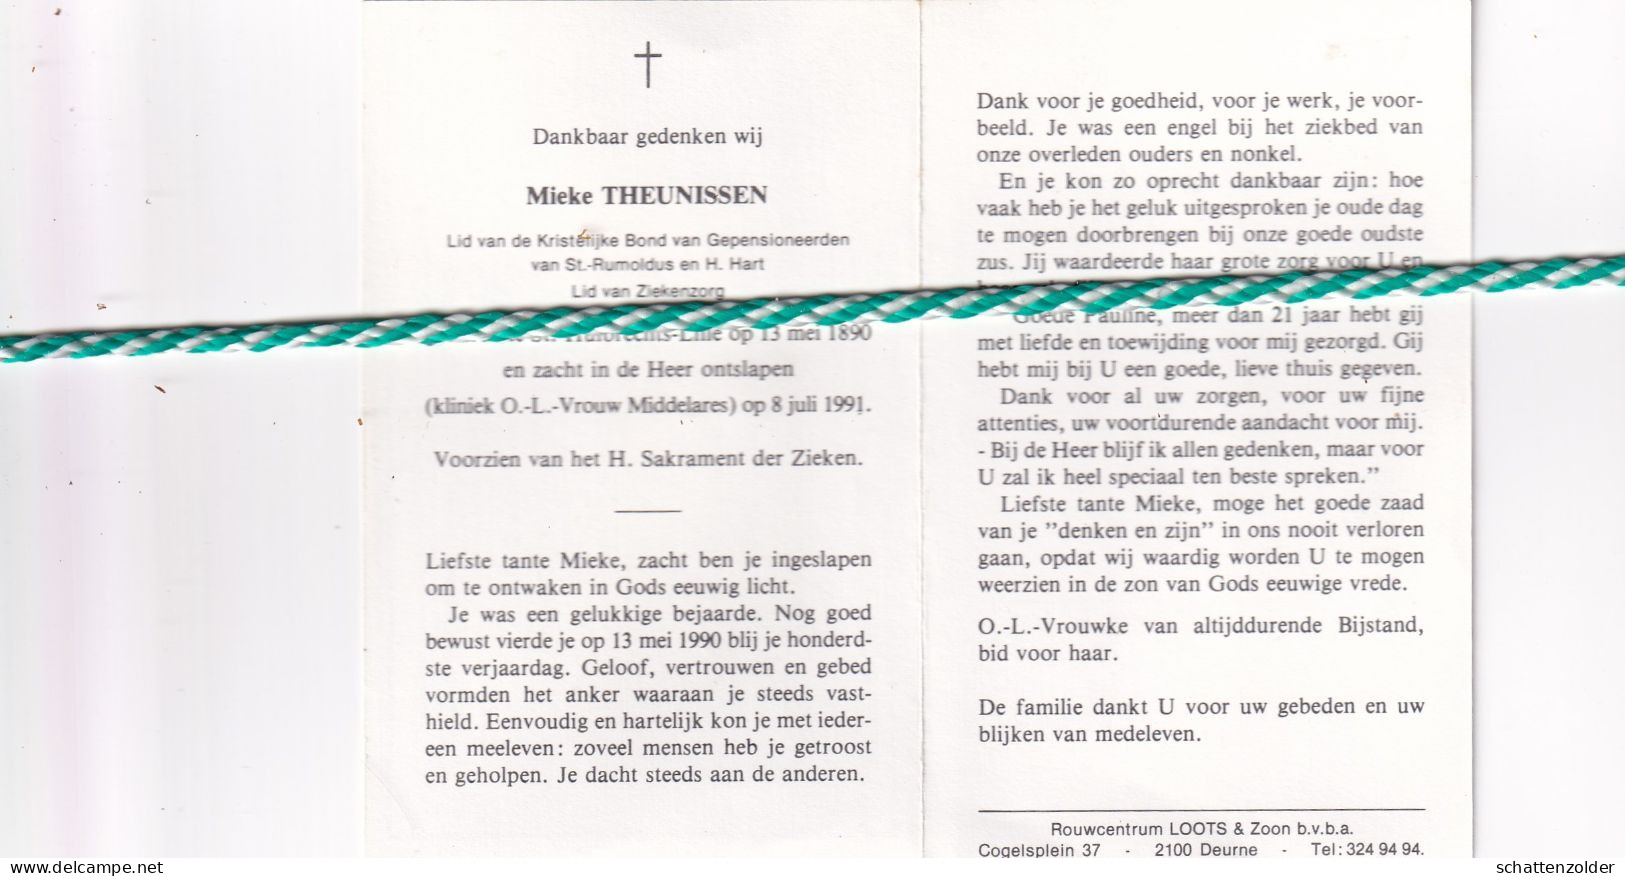 Mieke Theunissen, Sint-Huibrechts-Lille 1890, 1991. Honderdjarige - Esquela